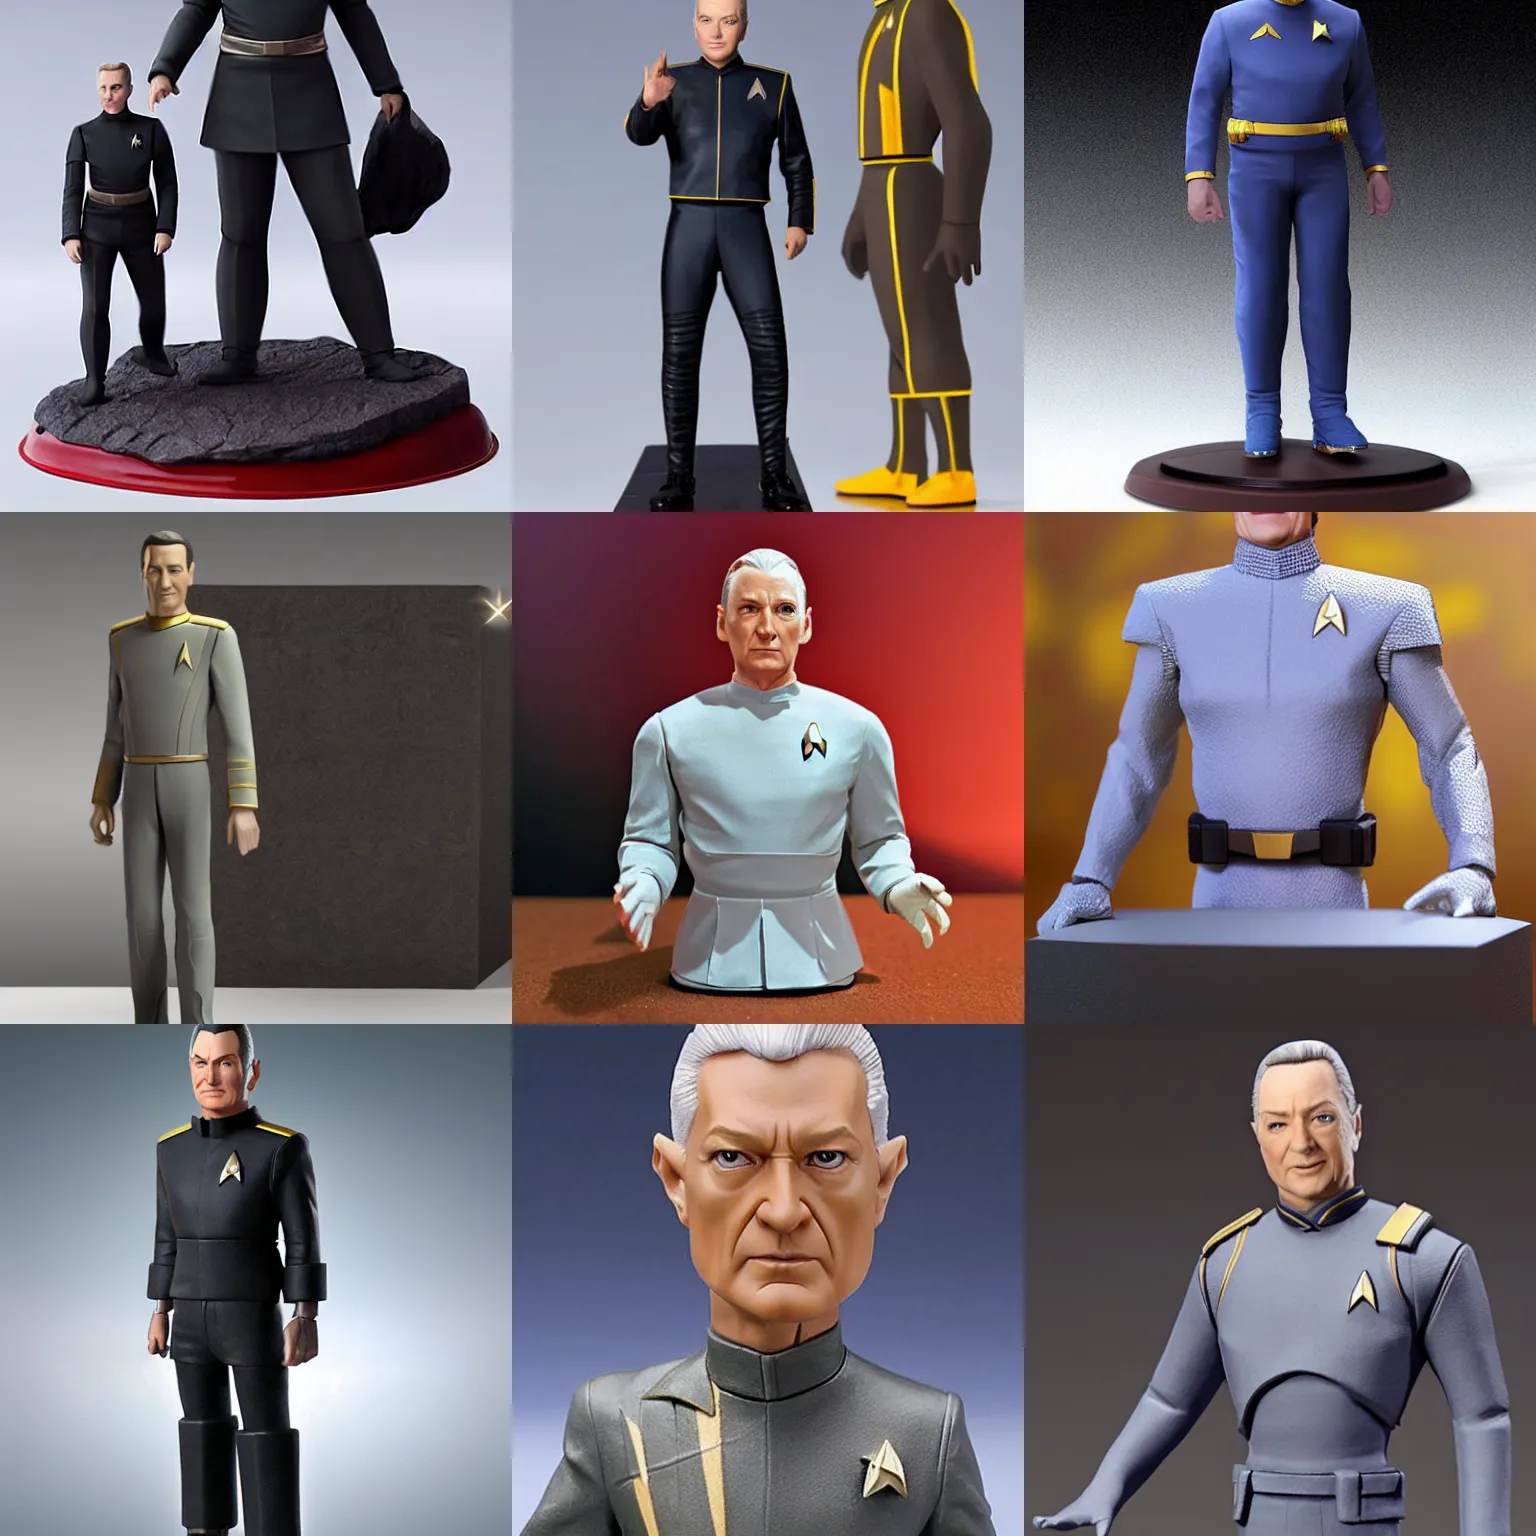 Prompt: a 3D figurine of Commander Data, Star Trek